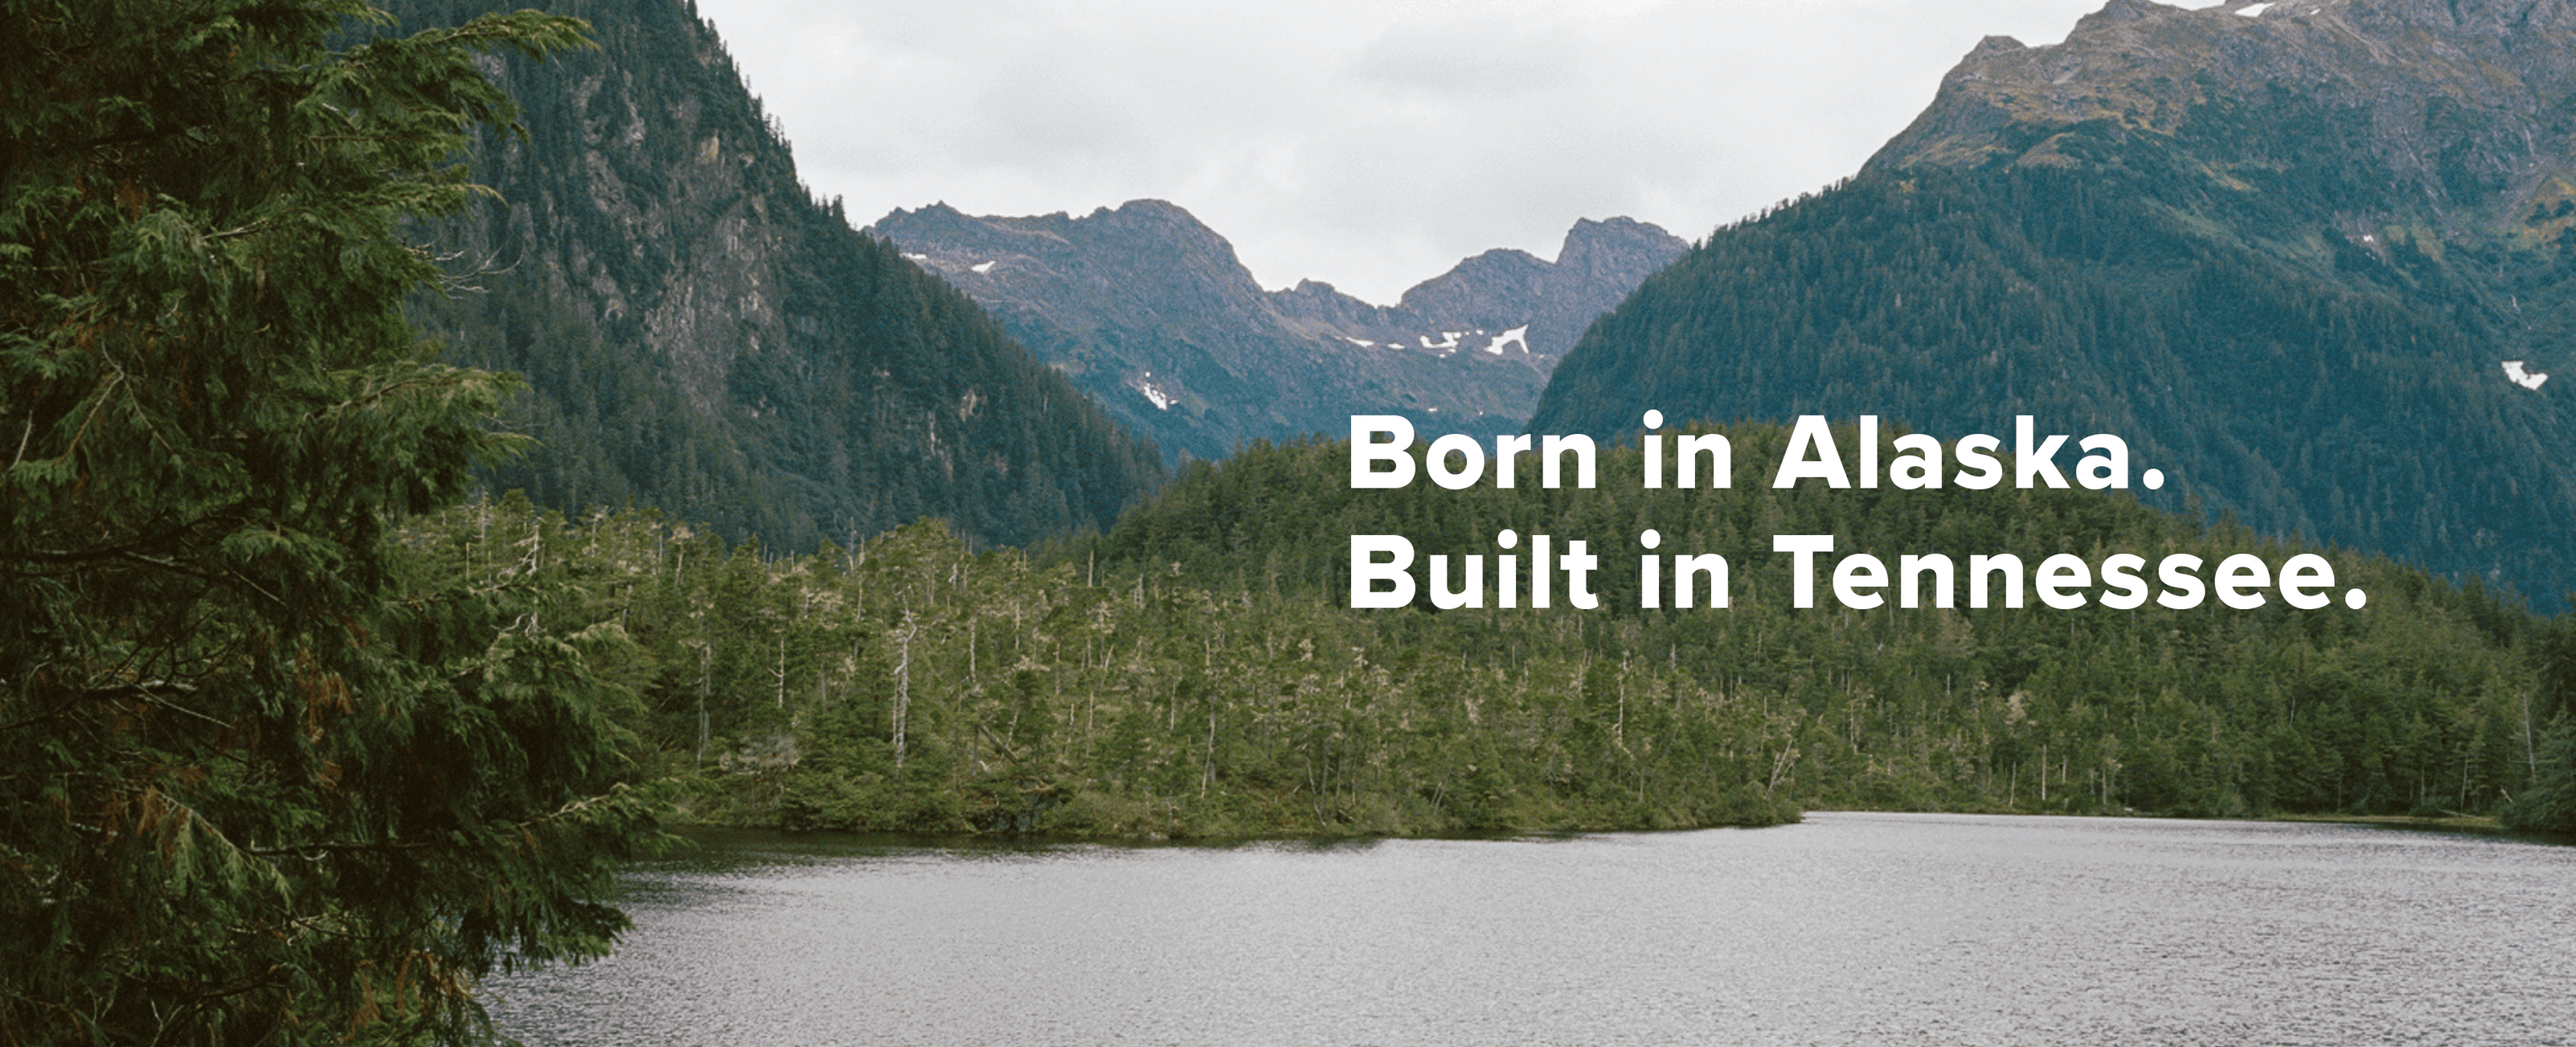 Born in Alaska. Built in Tennessee.